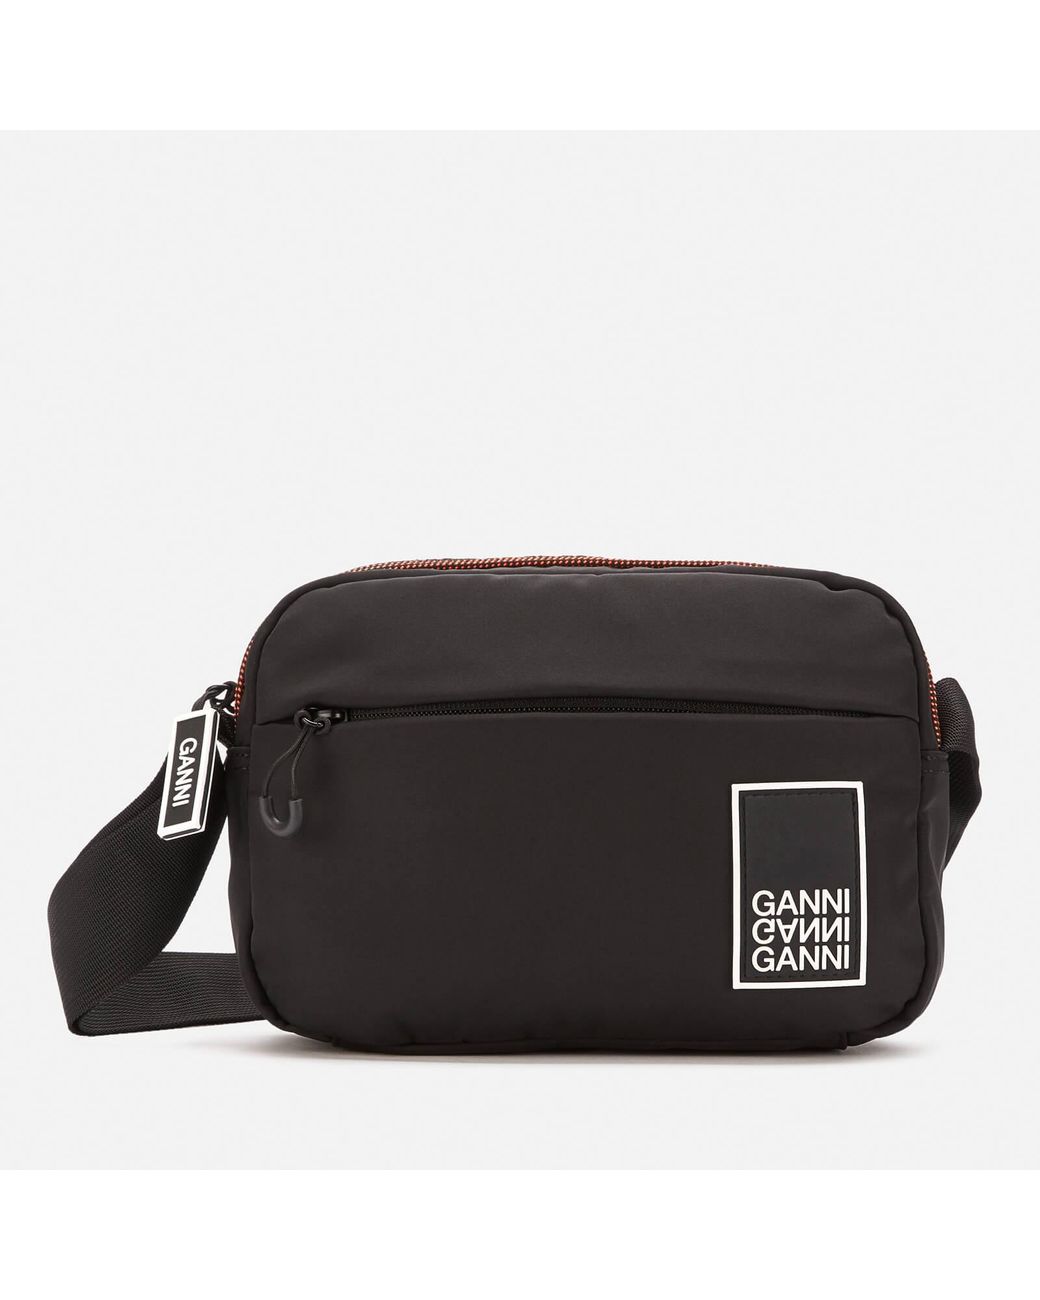 Ganni Tech Fabric Cross Body Bag in Black | Lyst Australia